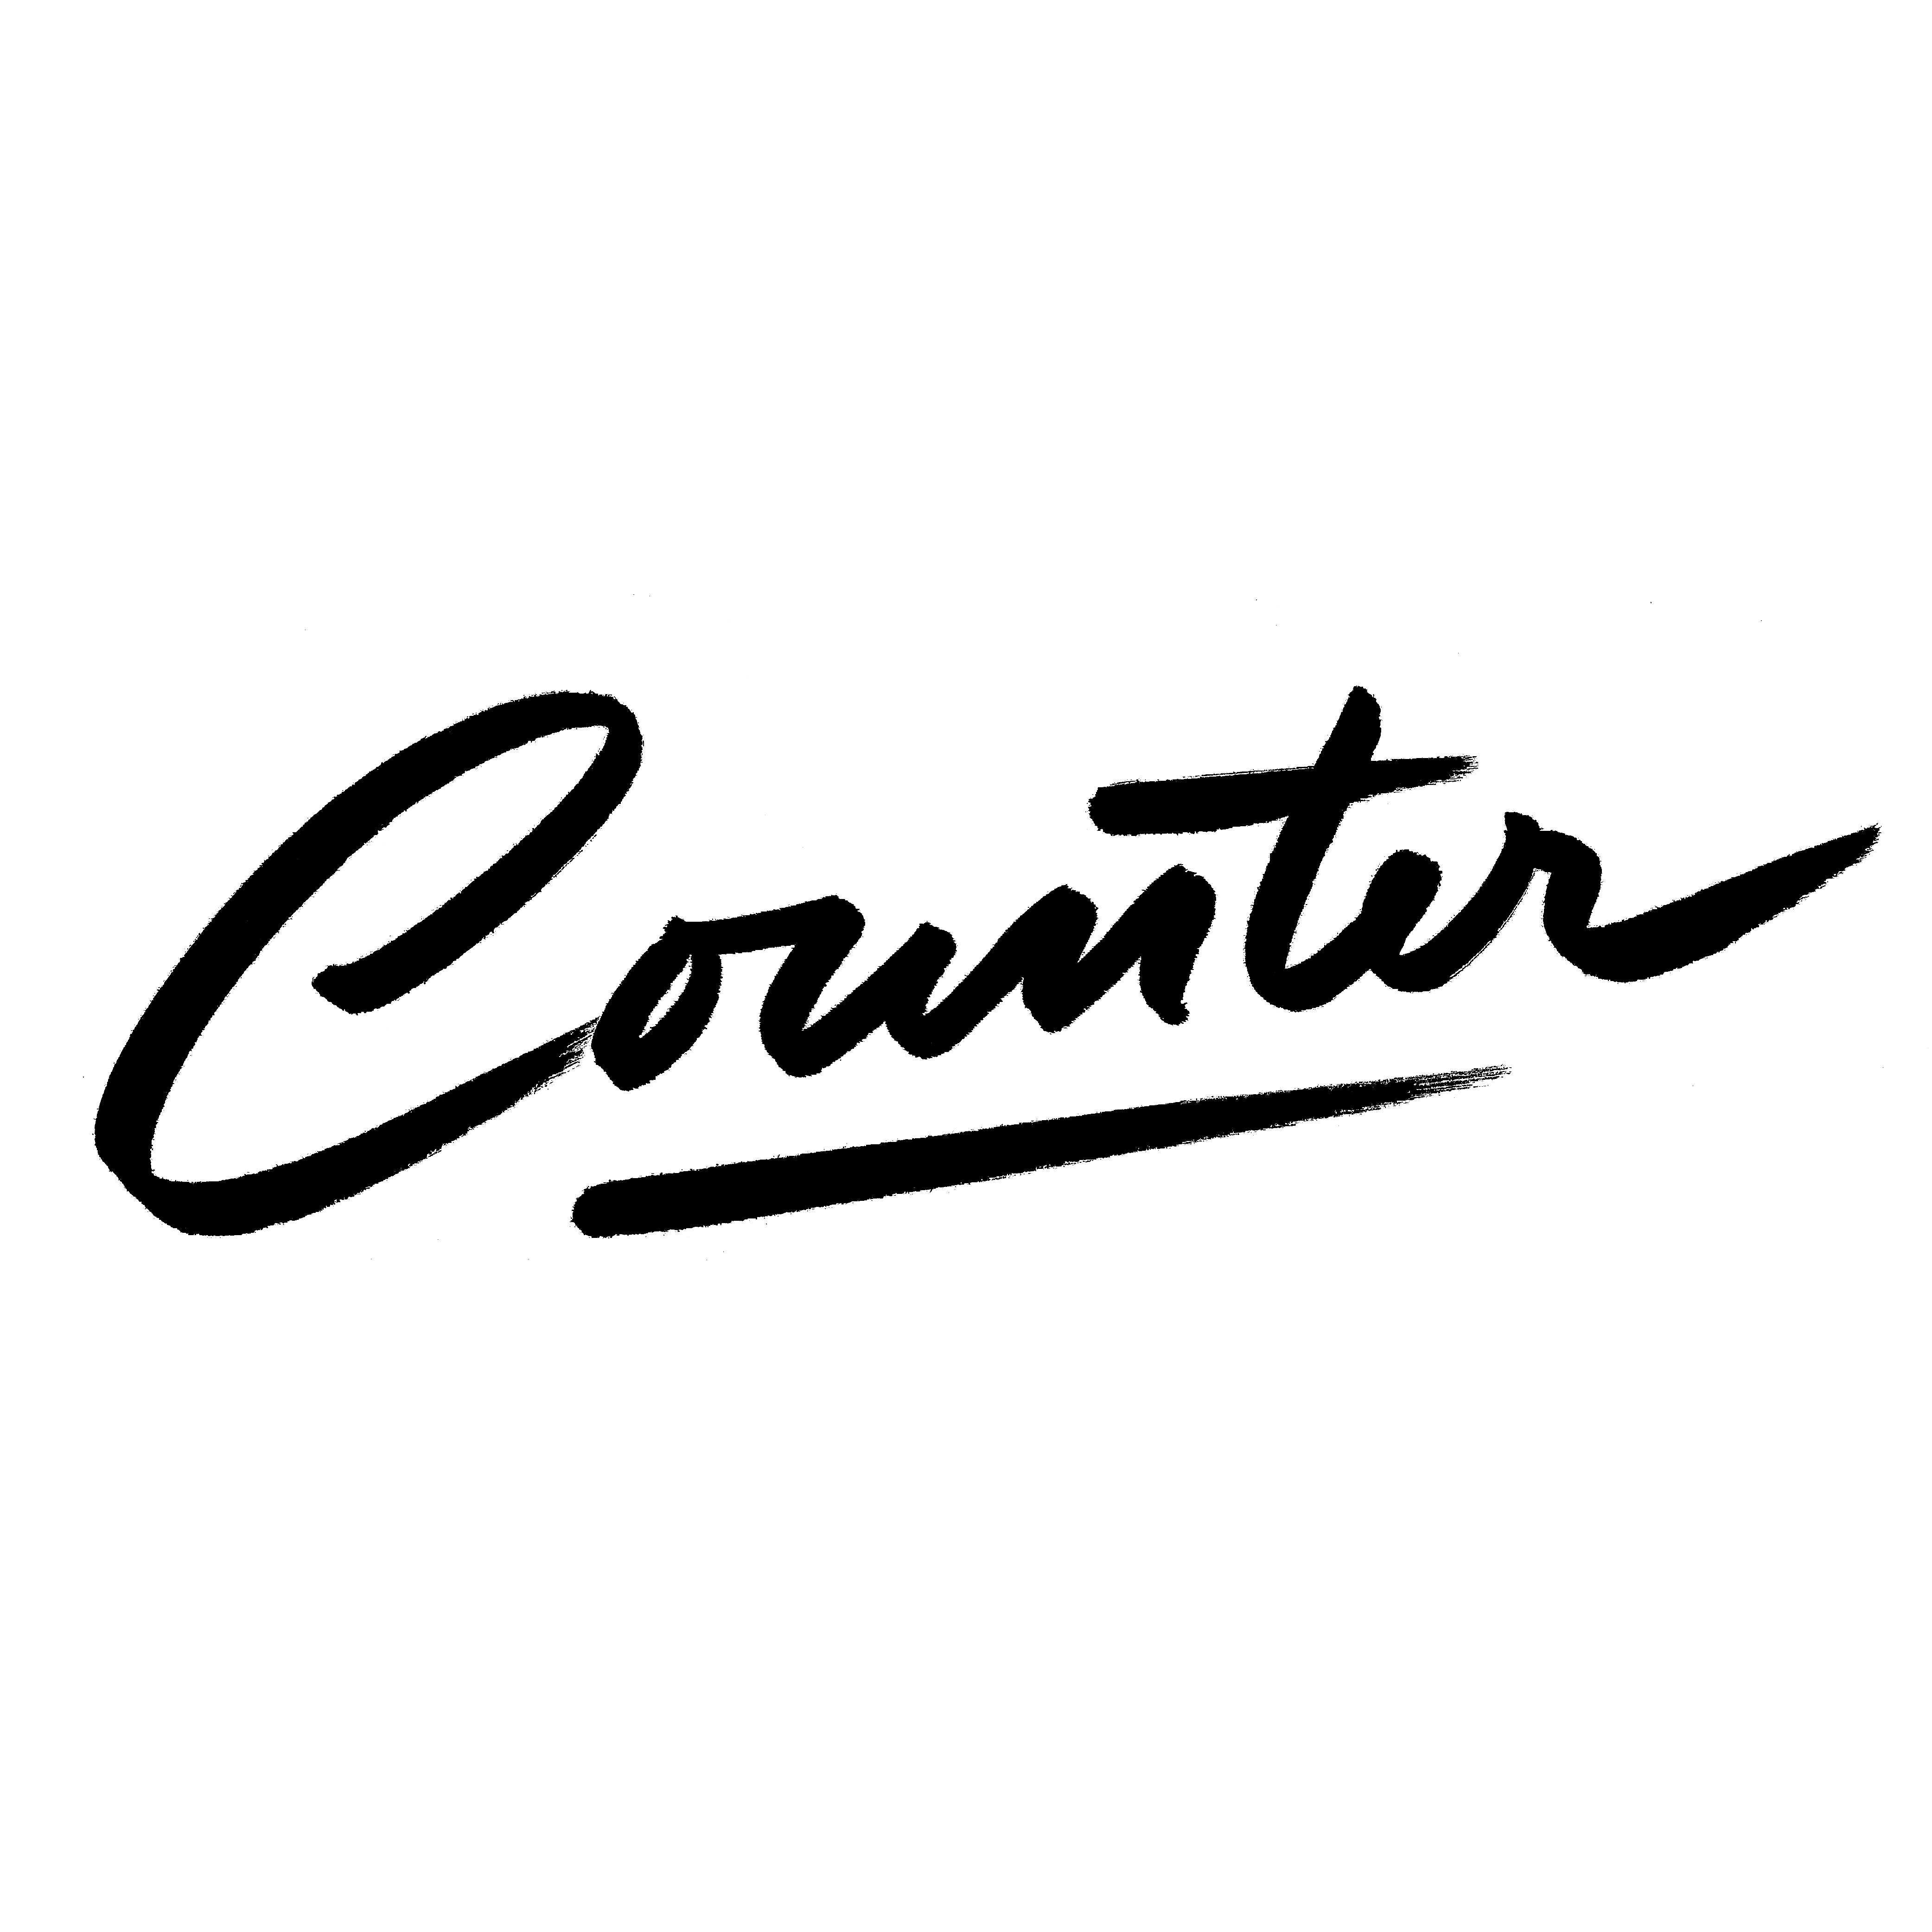 counter logotype design by Martina Flor